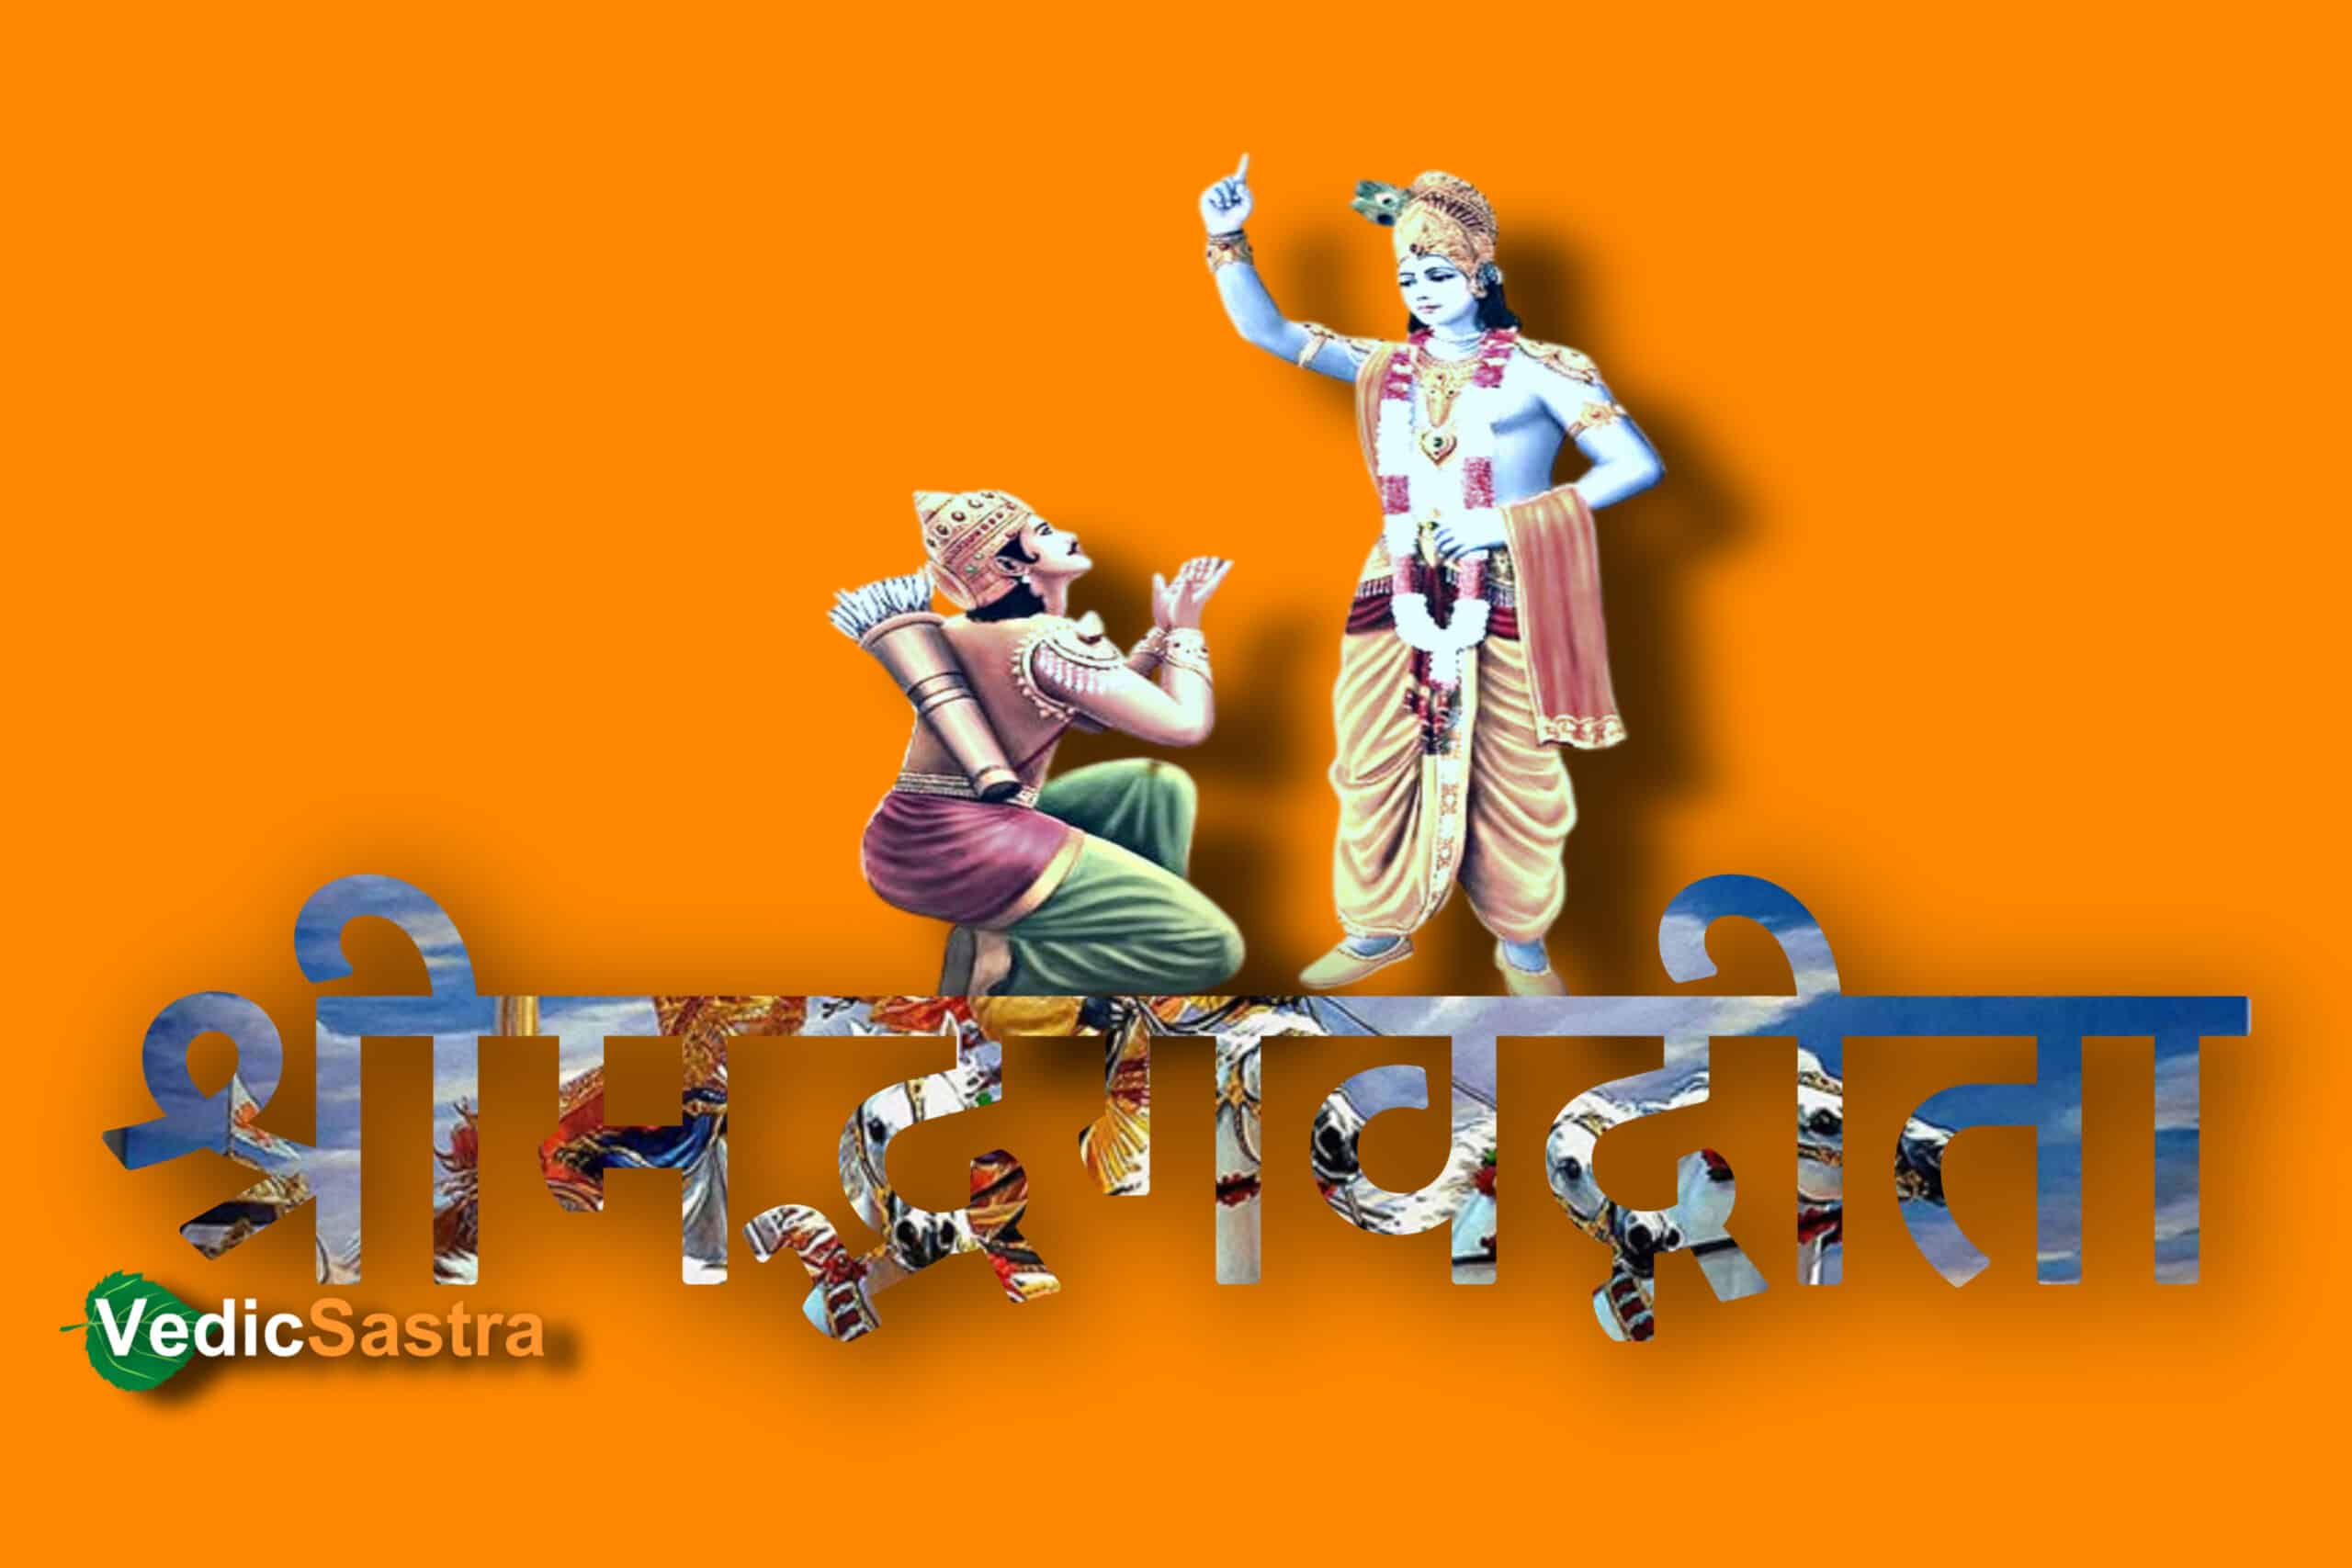 Bhagwat Geeta in Hindi by Vedicsastra